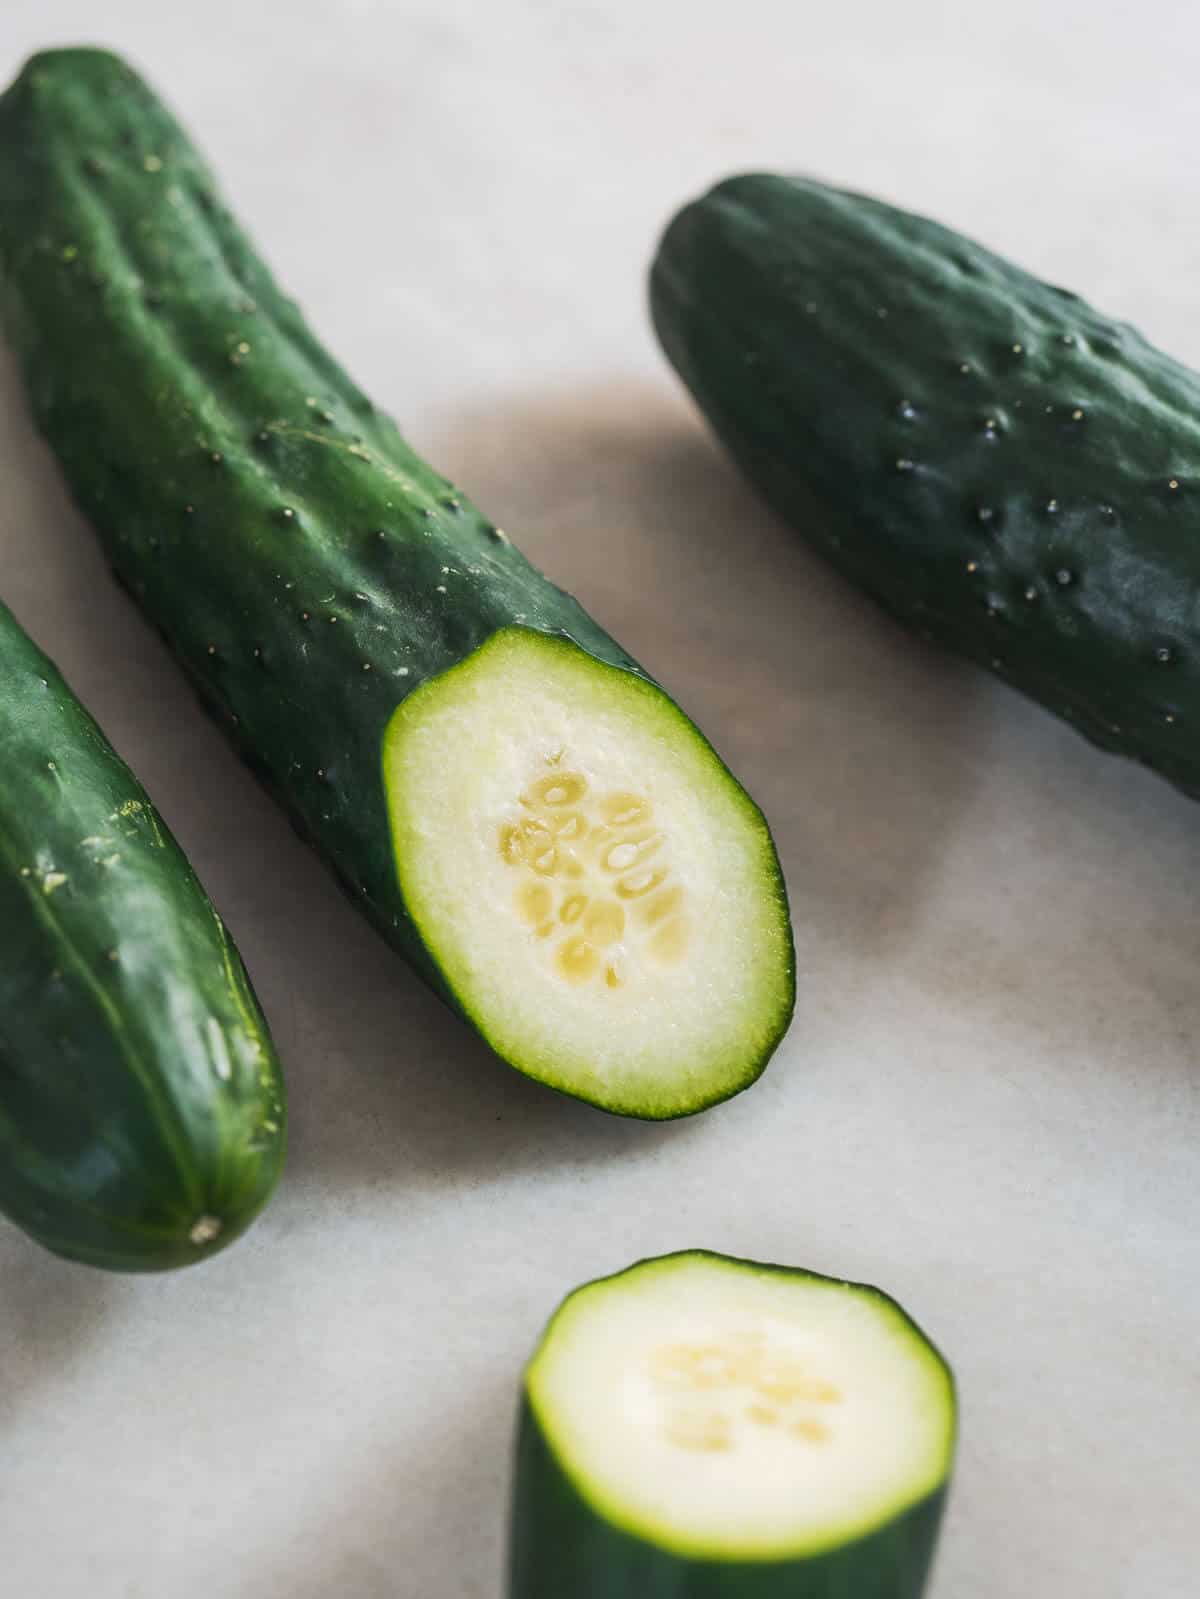 transversal cut on a cucumber.